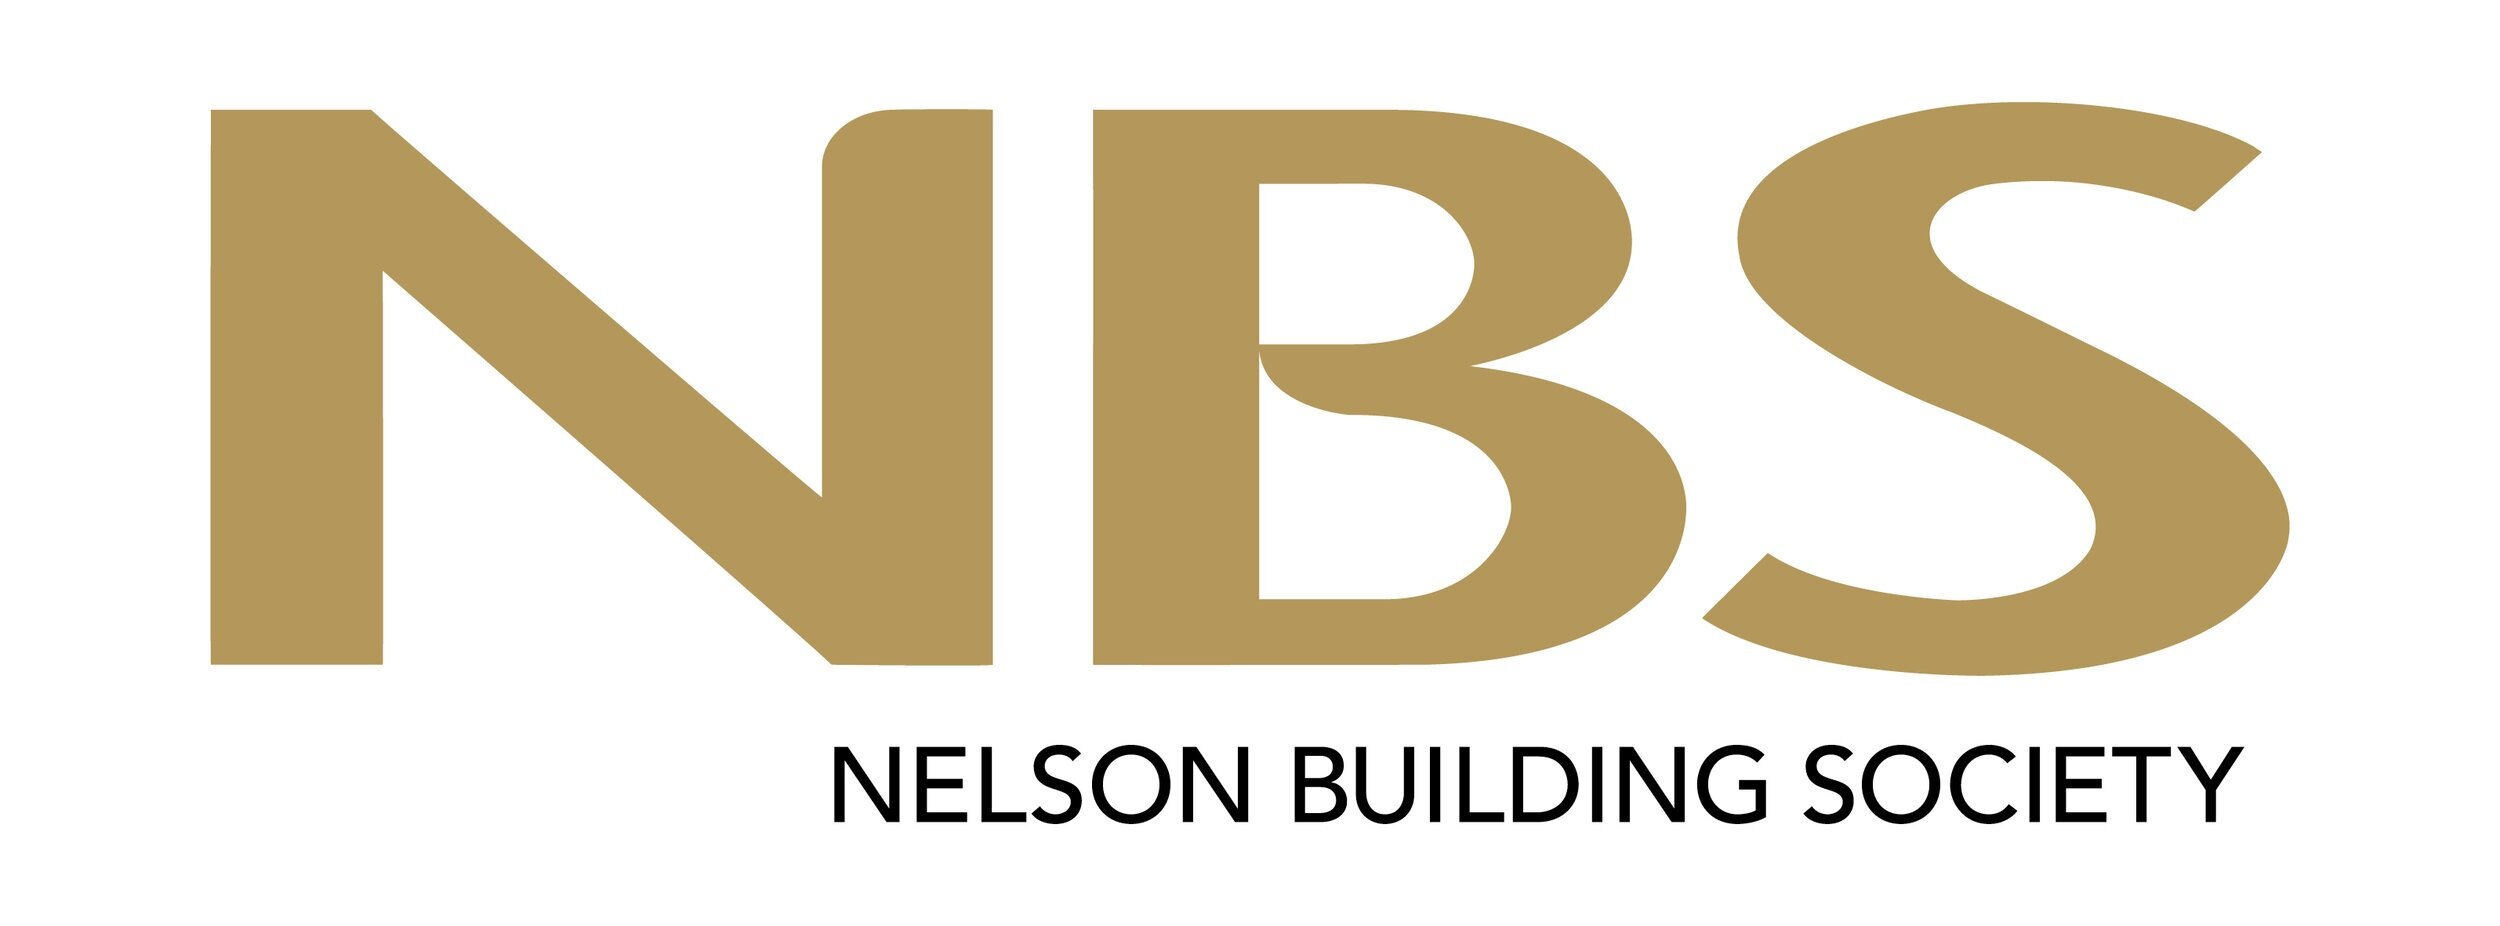 NBS-Nelson-Building-Society-Gold-Black-Toni-Lane.jpg